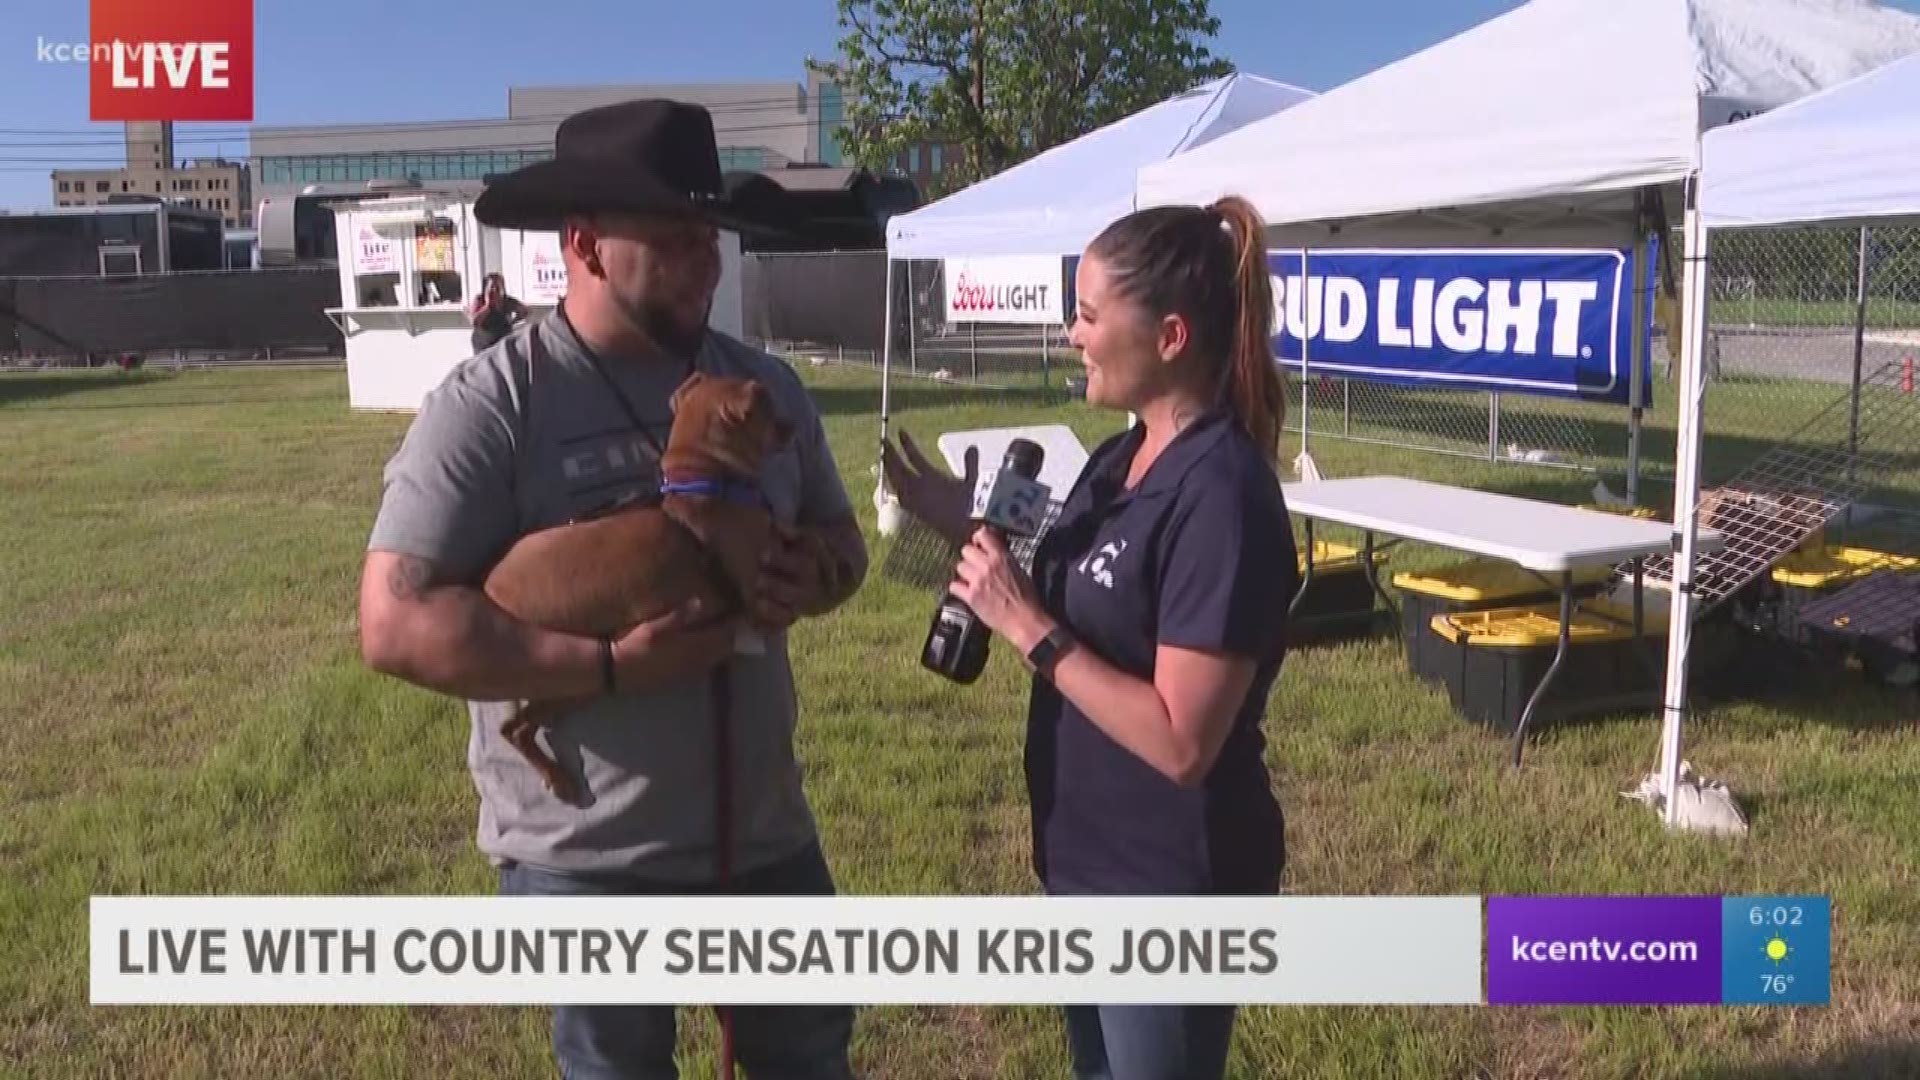 Kris Jones' newest single benefits rescue animals, so evening anchor Leslie Draffin interviewed Jones and a special friend.